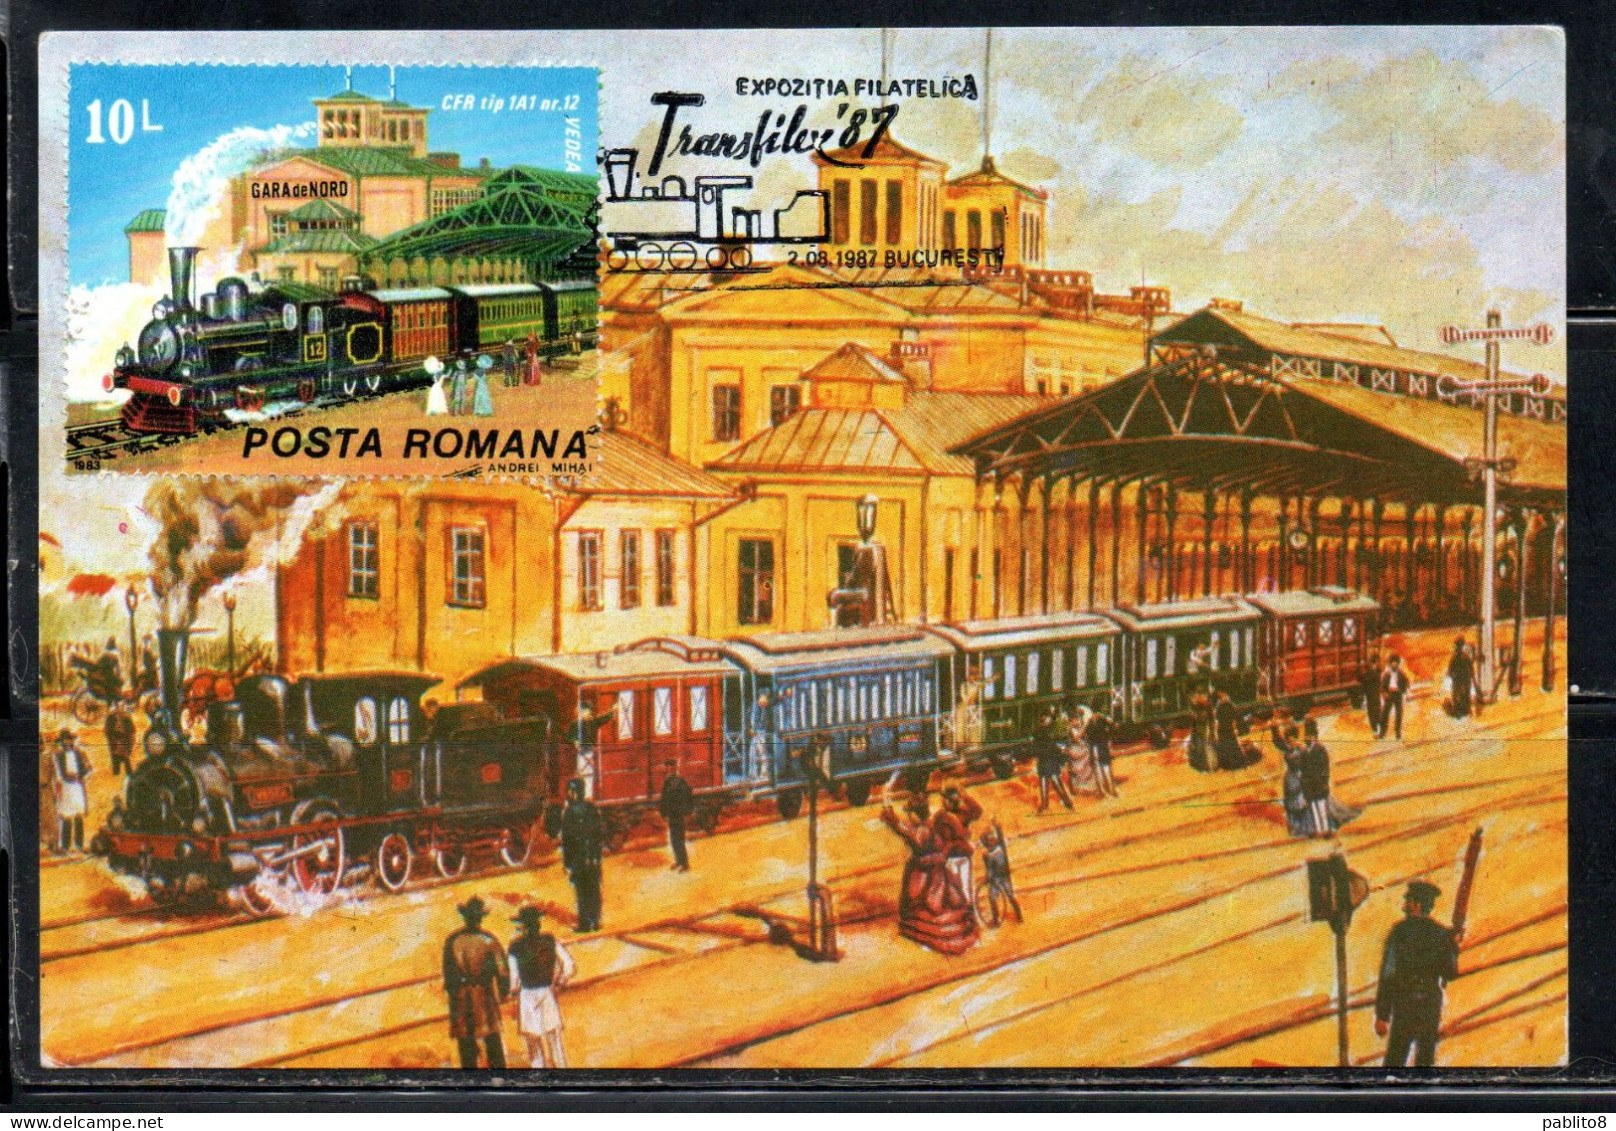 ROMANIA 1983  TRAIN STATION LEAVING GARE DE NORD CFR 1A1 ORIENT EXPRESS CENTENARY 10L MAXI MAXIMUM CARD - Cartes-maximum (CM)